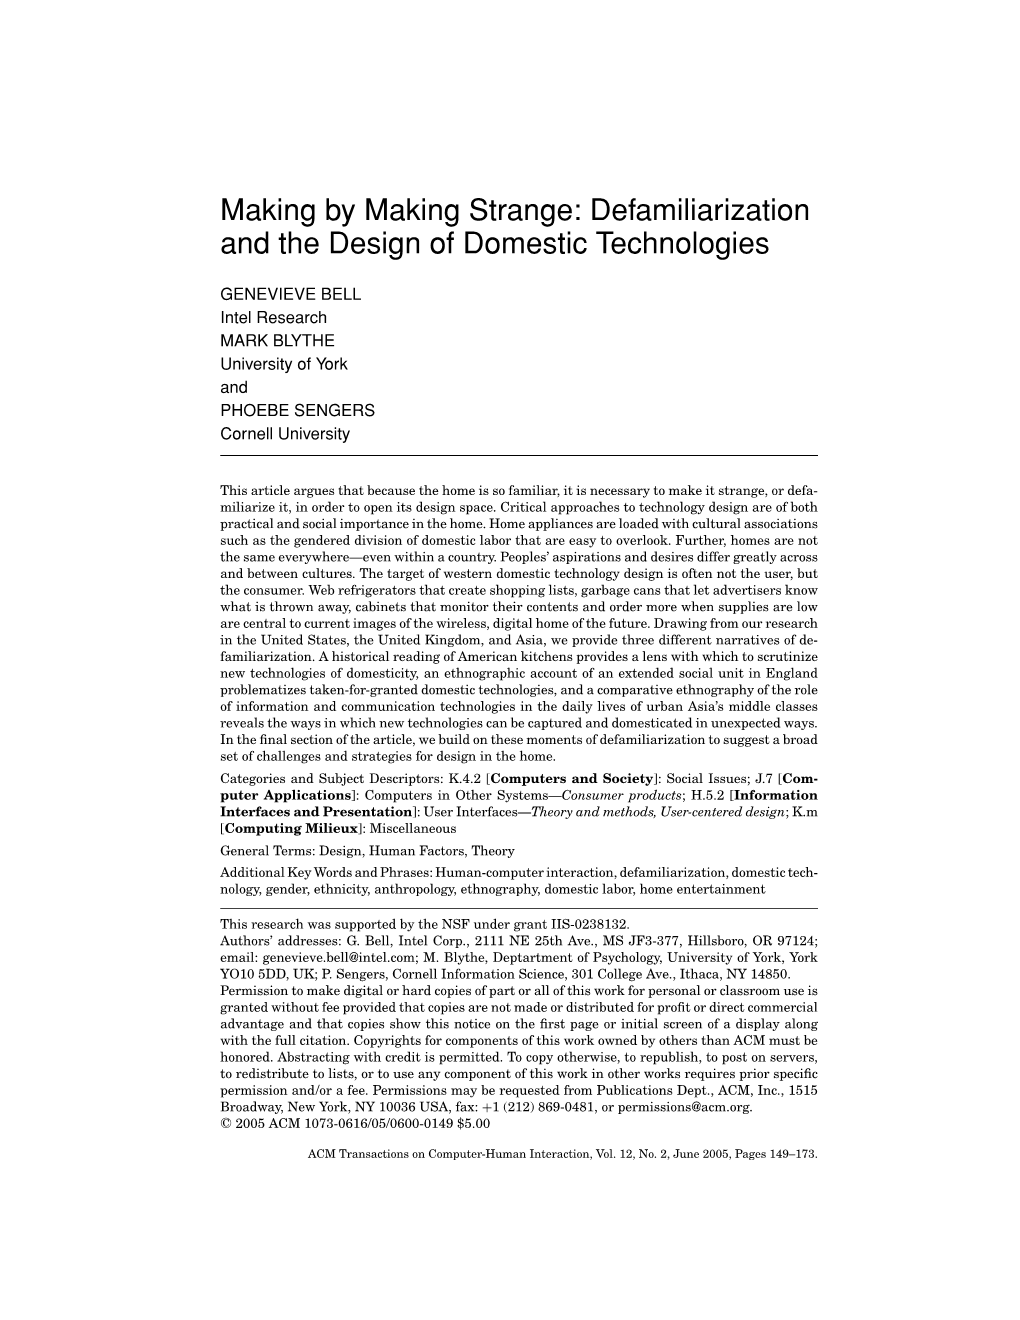 Defamiliarization and the Design of Domestic Technologies